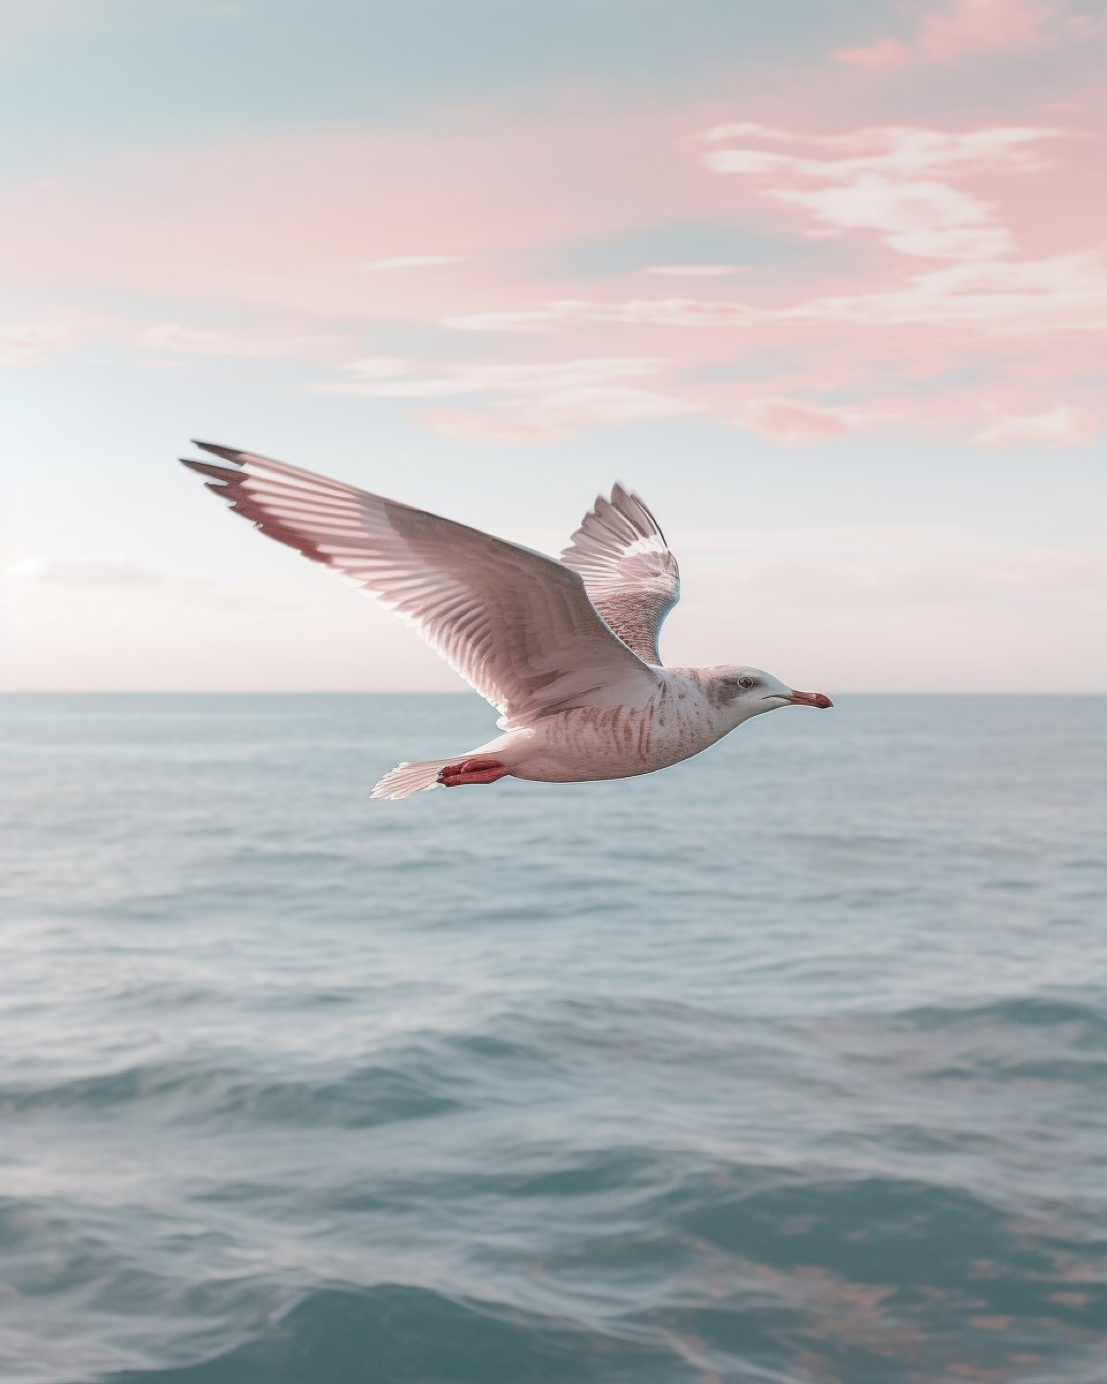 cinematic shot of seagull flying over ocean, minimalism, soft pink color grading, 35mm lens --ar 4:5